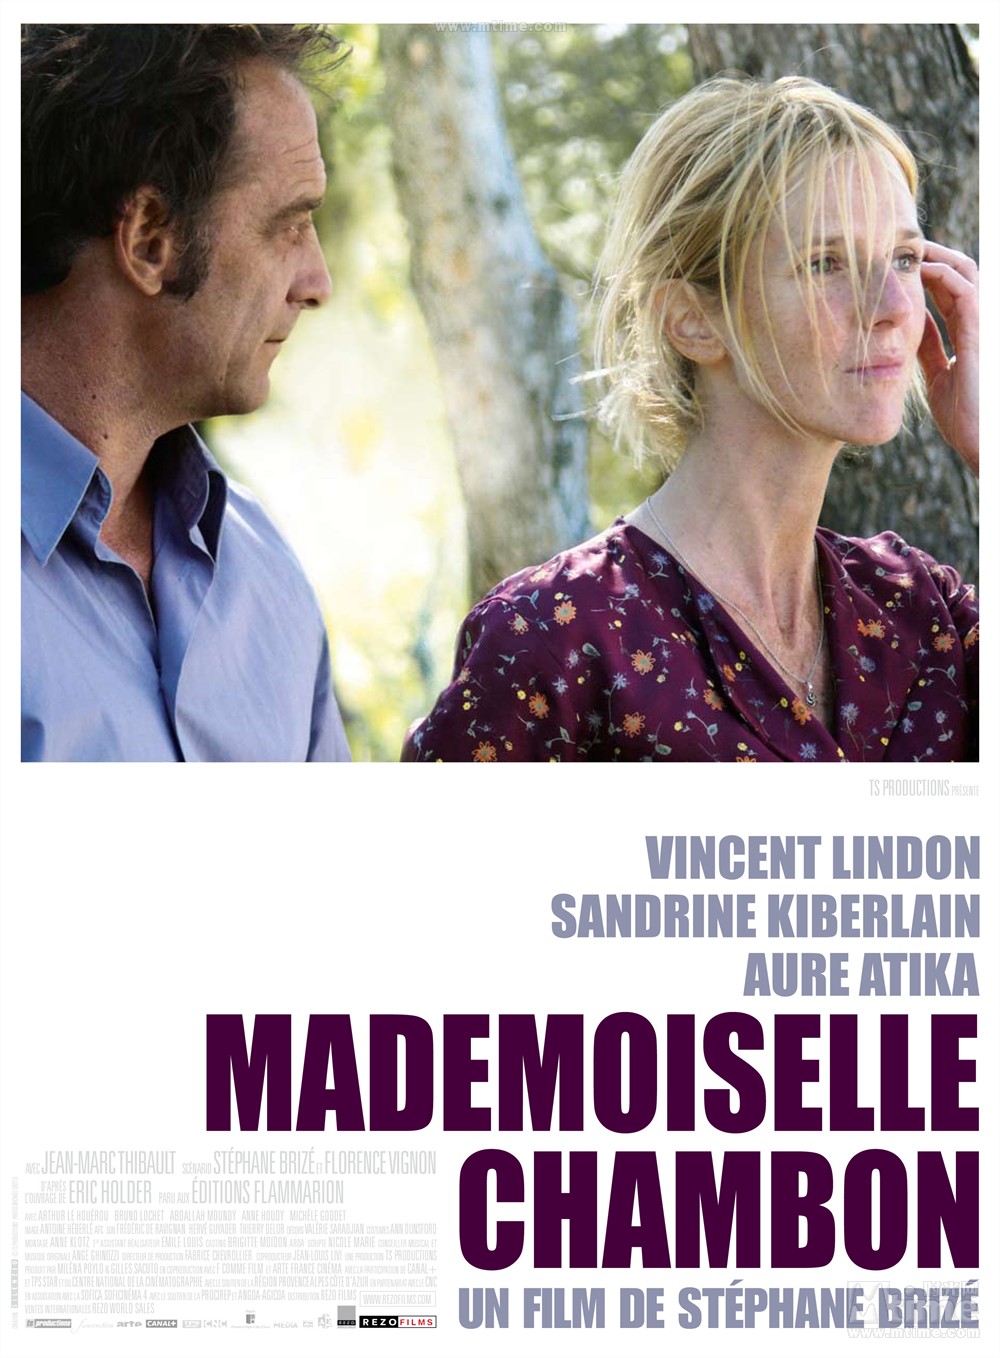 mademoiselle chambon movie poster